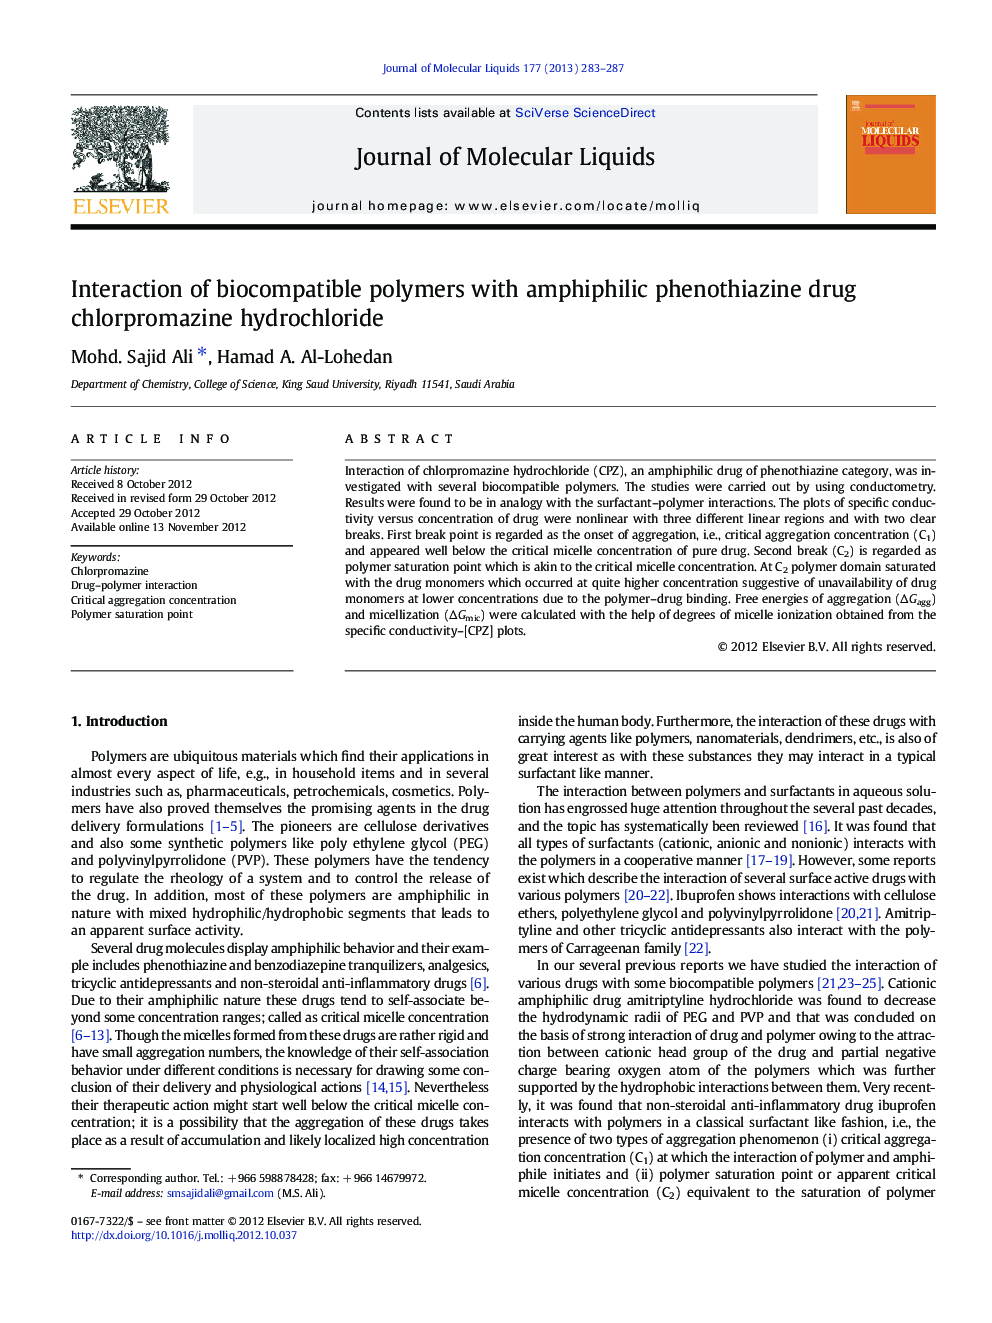 Interaction of biocompatible polymers with amphiphilic phenothiazine drug chlorpromazine hydrochloride